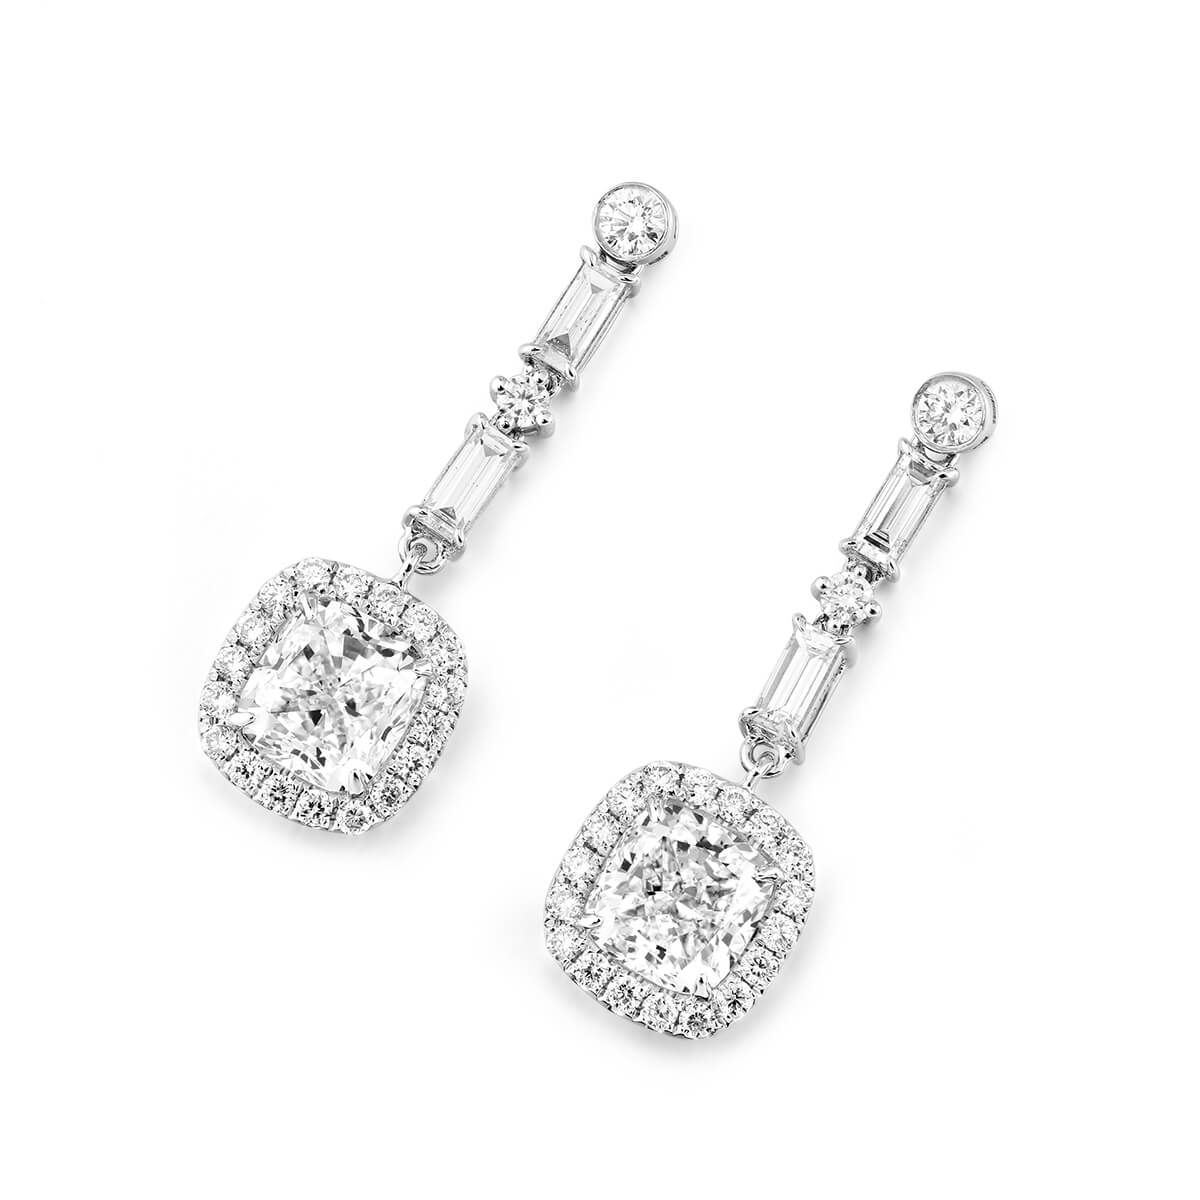  White Diamond Earrings, 2.72 Ct. TW, Cushion shape, GIA Certified, JCEW05408311